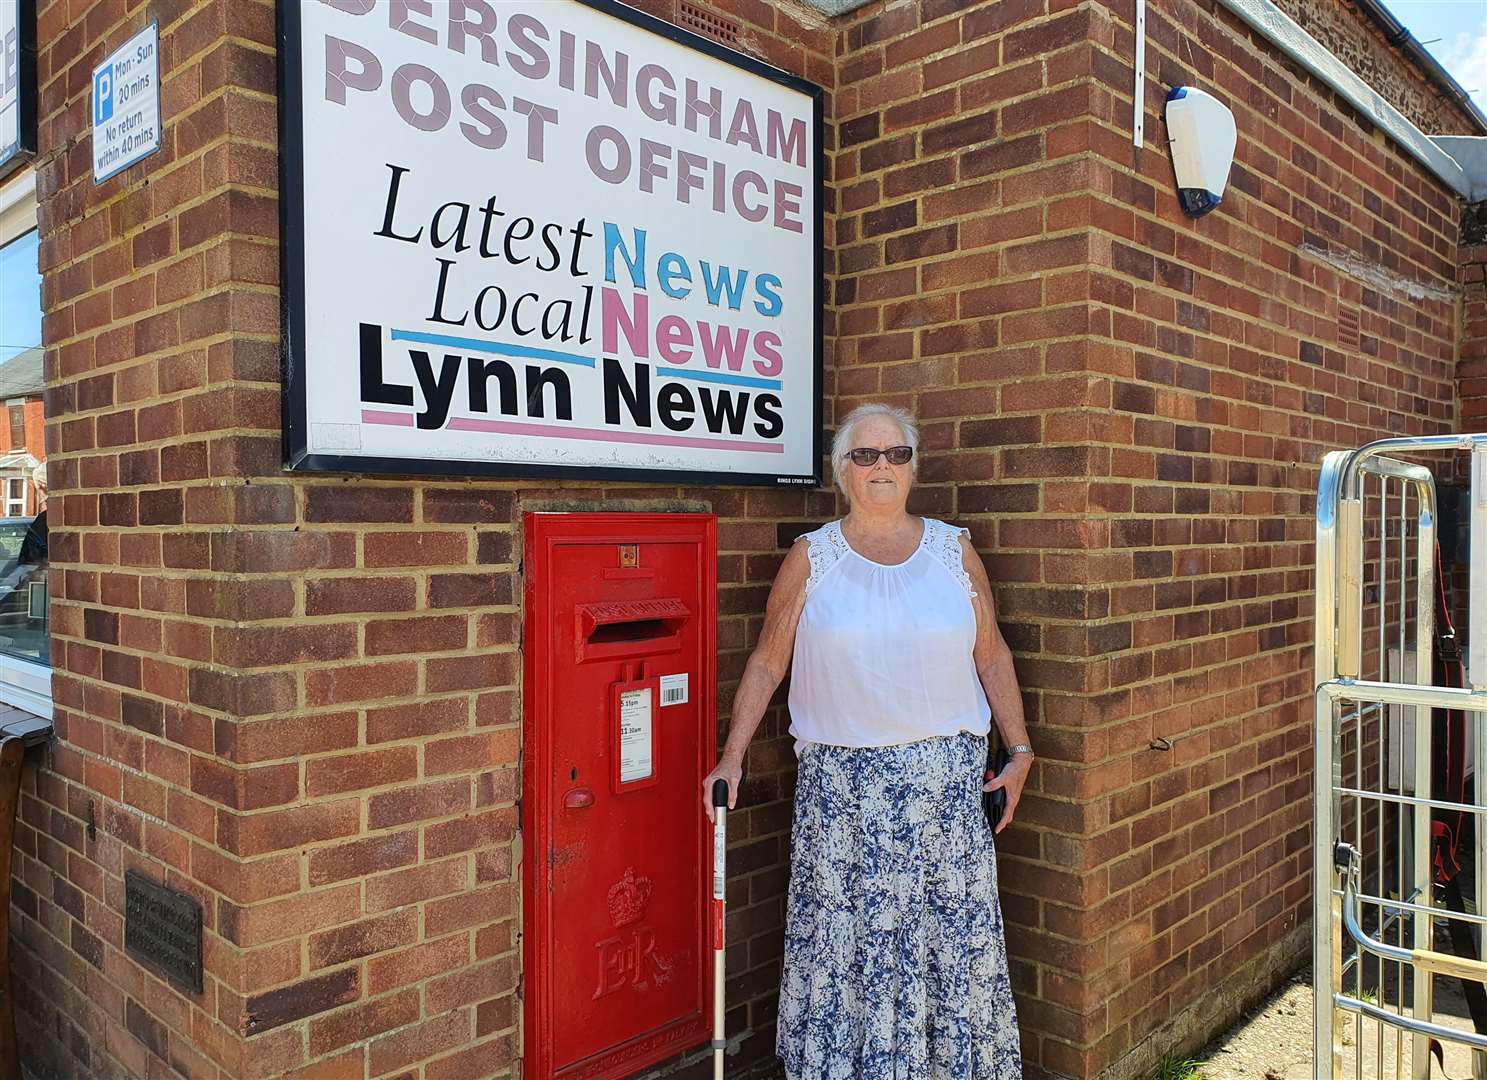 Julie Phillips, 79 can not walk far and relies on Dersingham Post Office